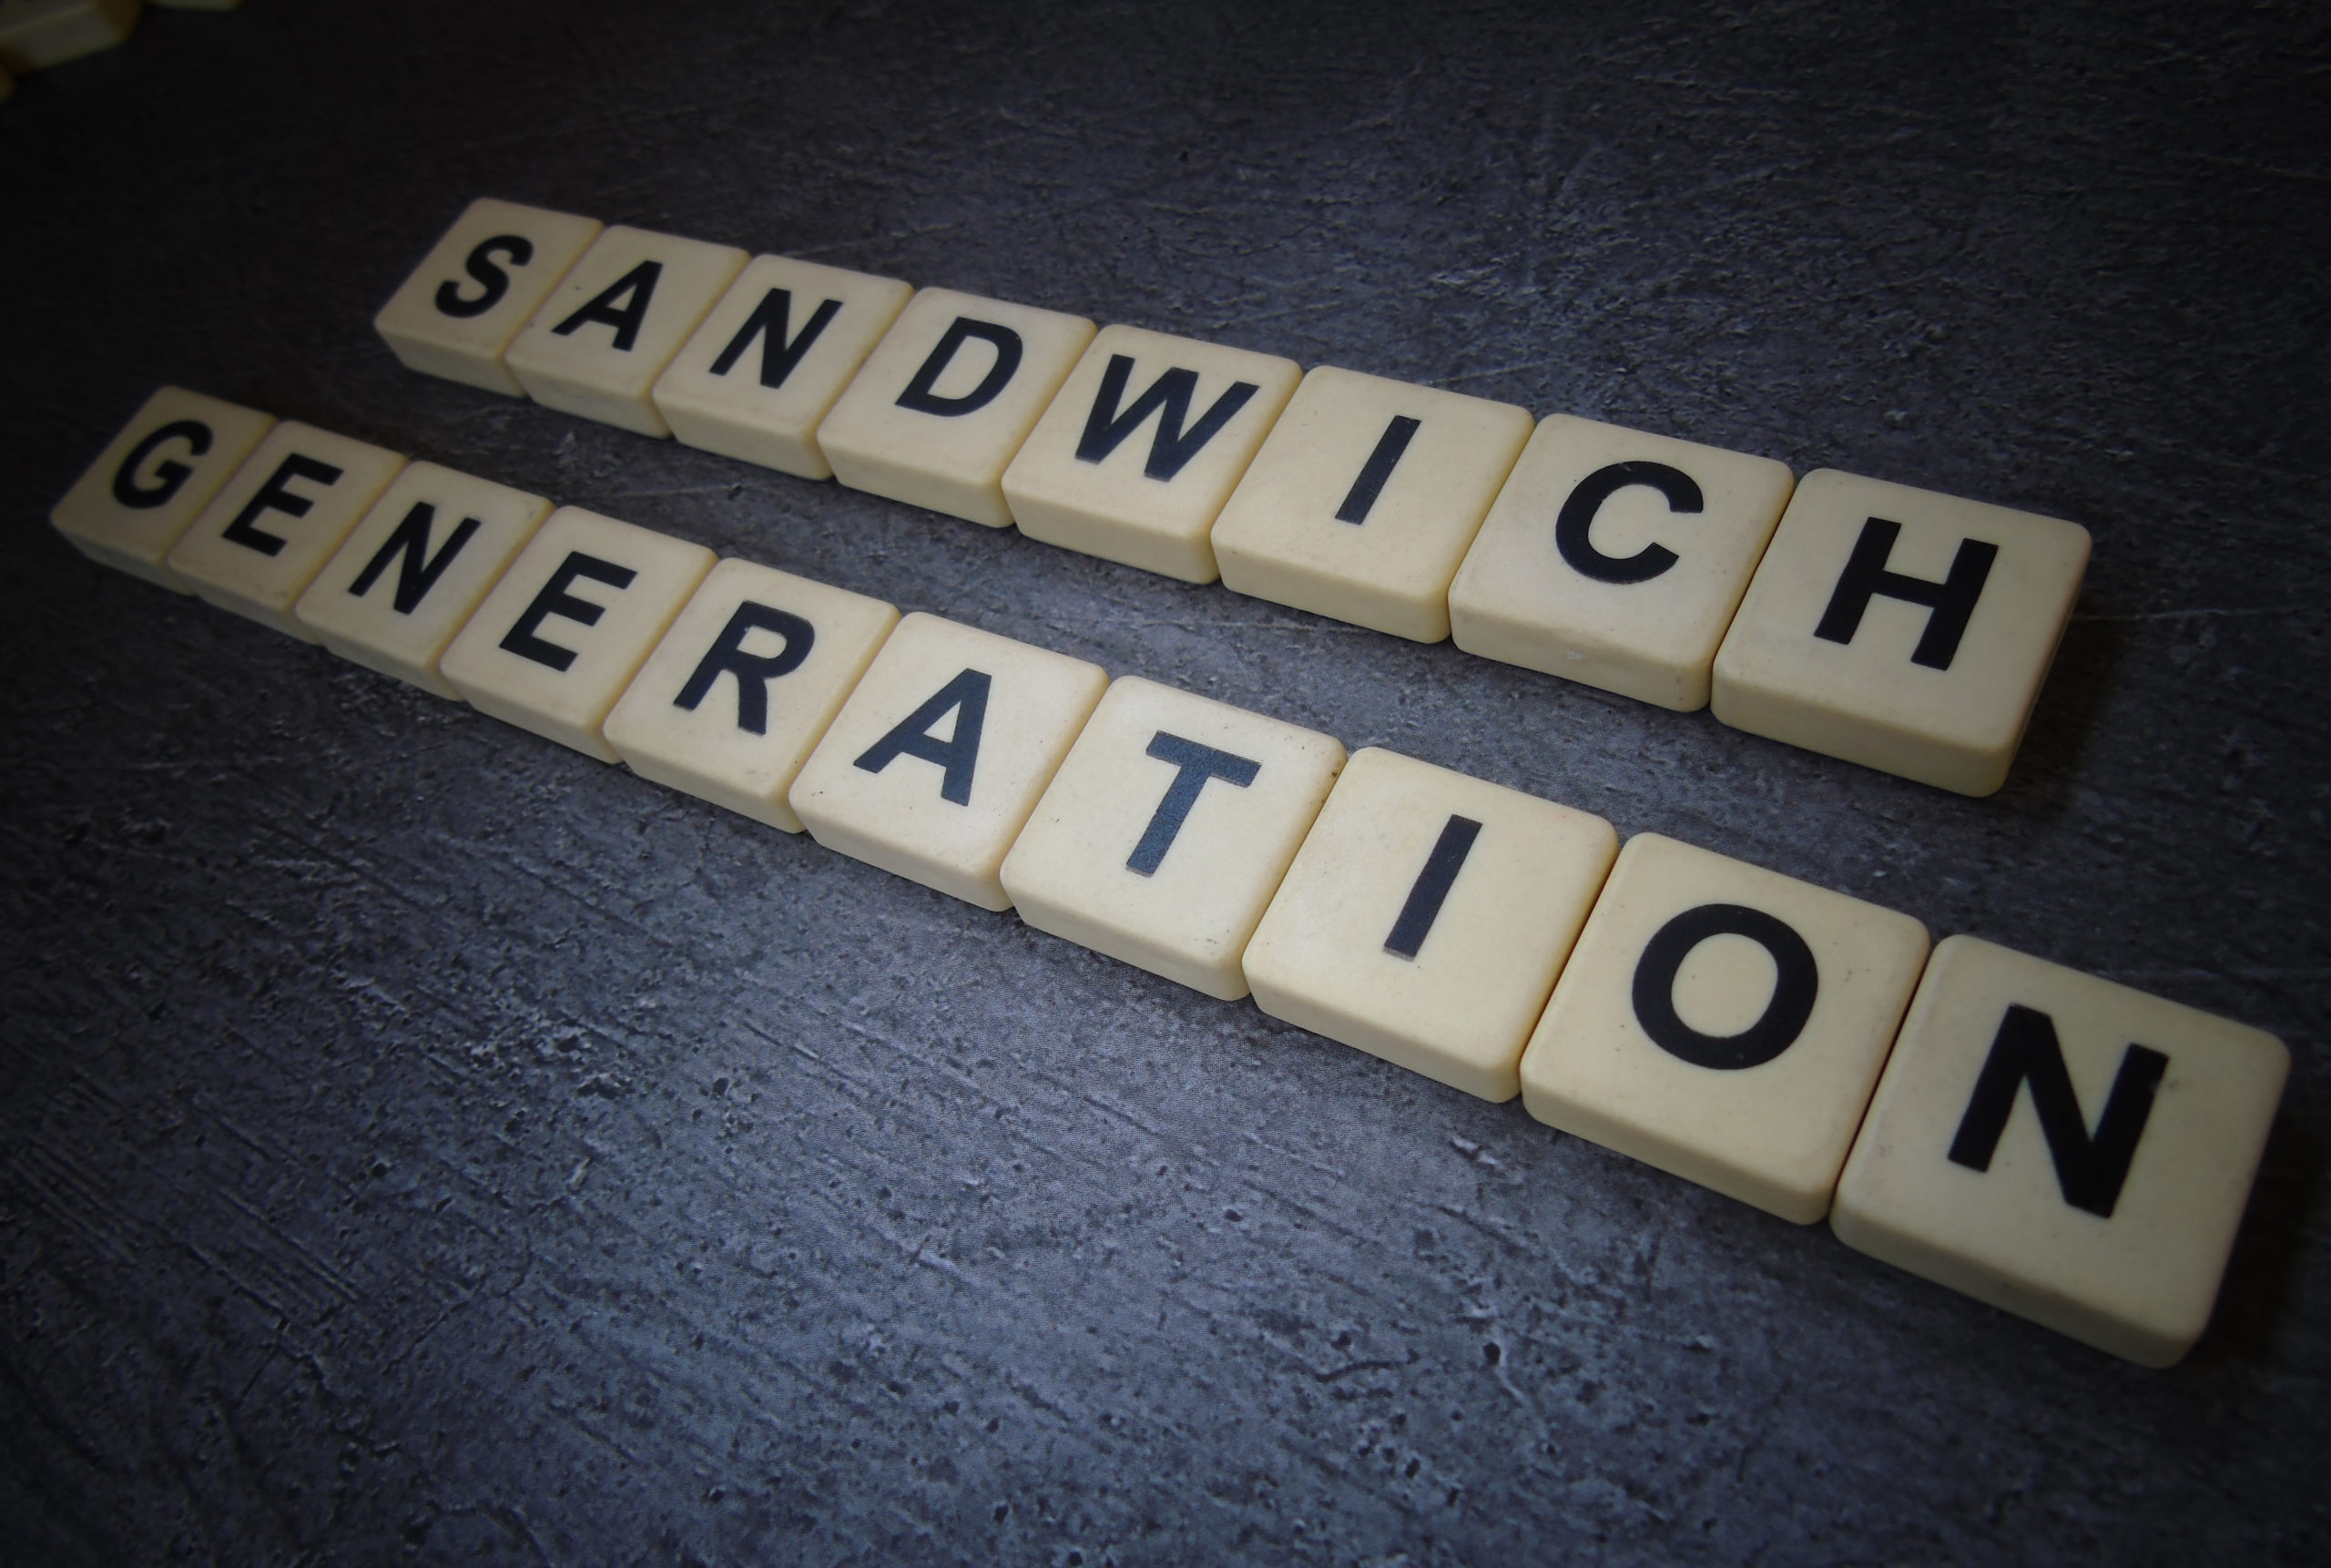 Elder Law Planning for the Sandwich Generation